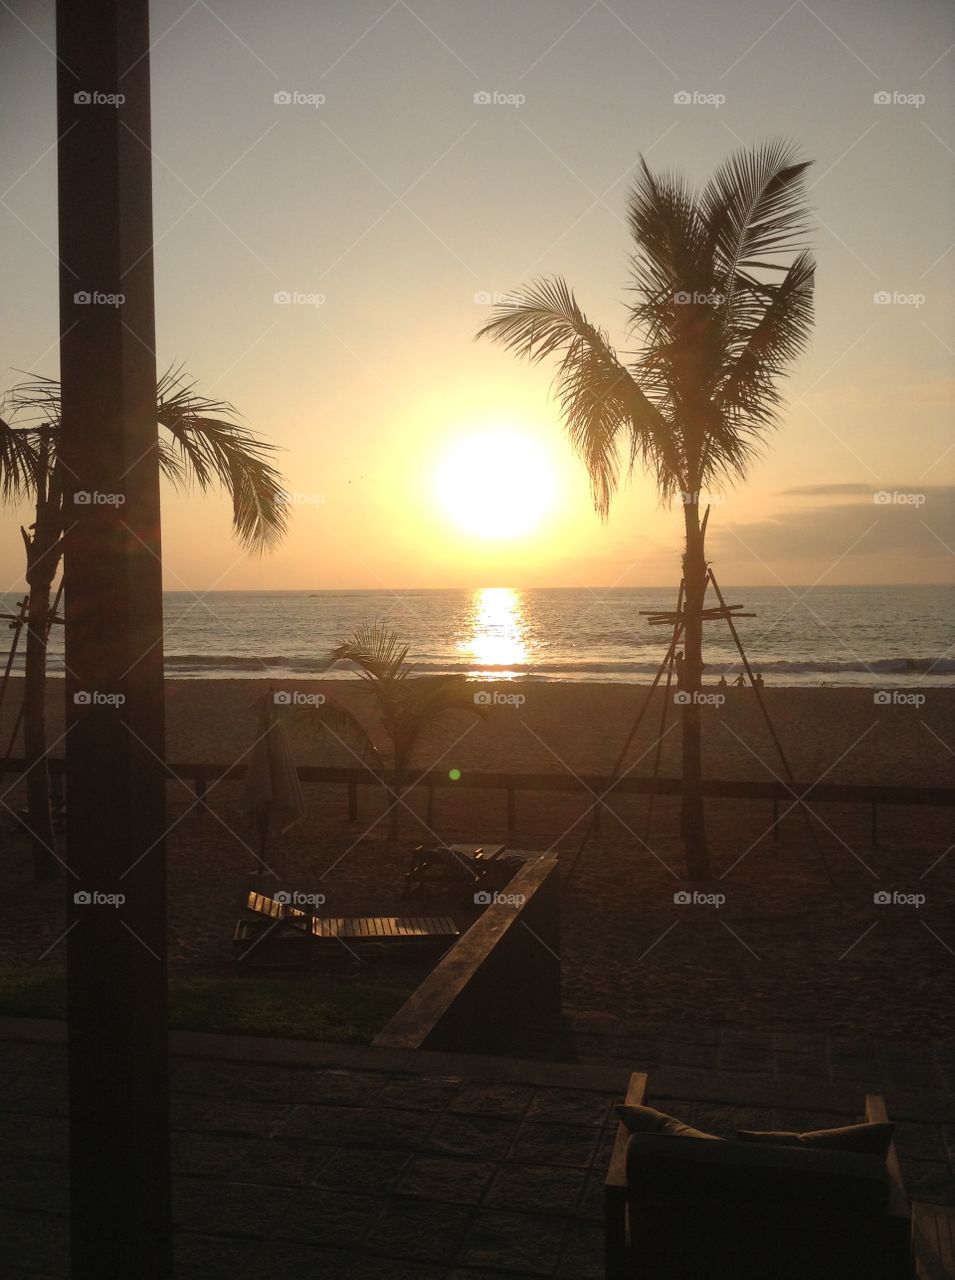 Sunset on the ocean beach with three palms at dusk